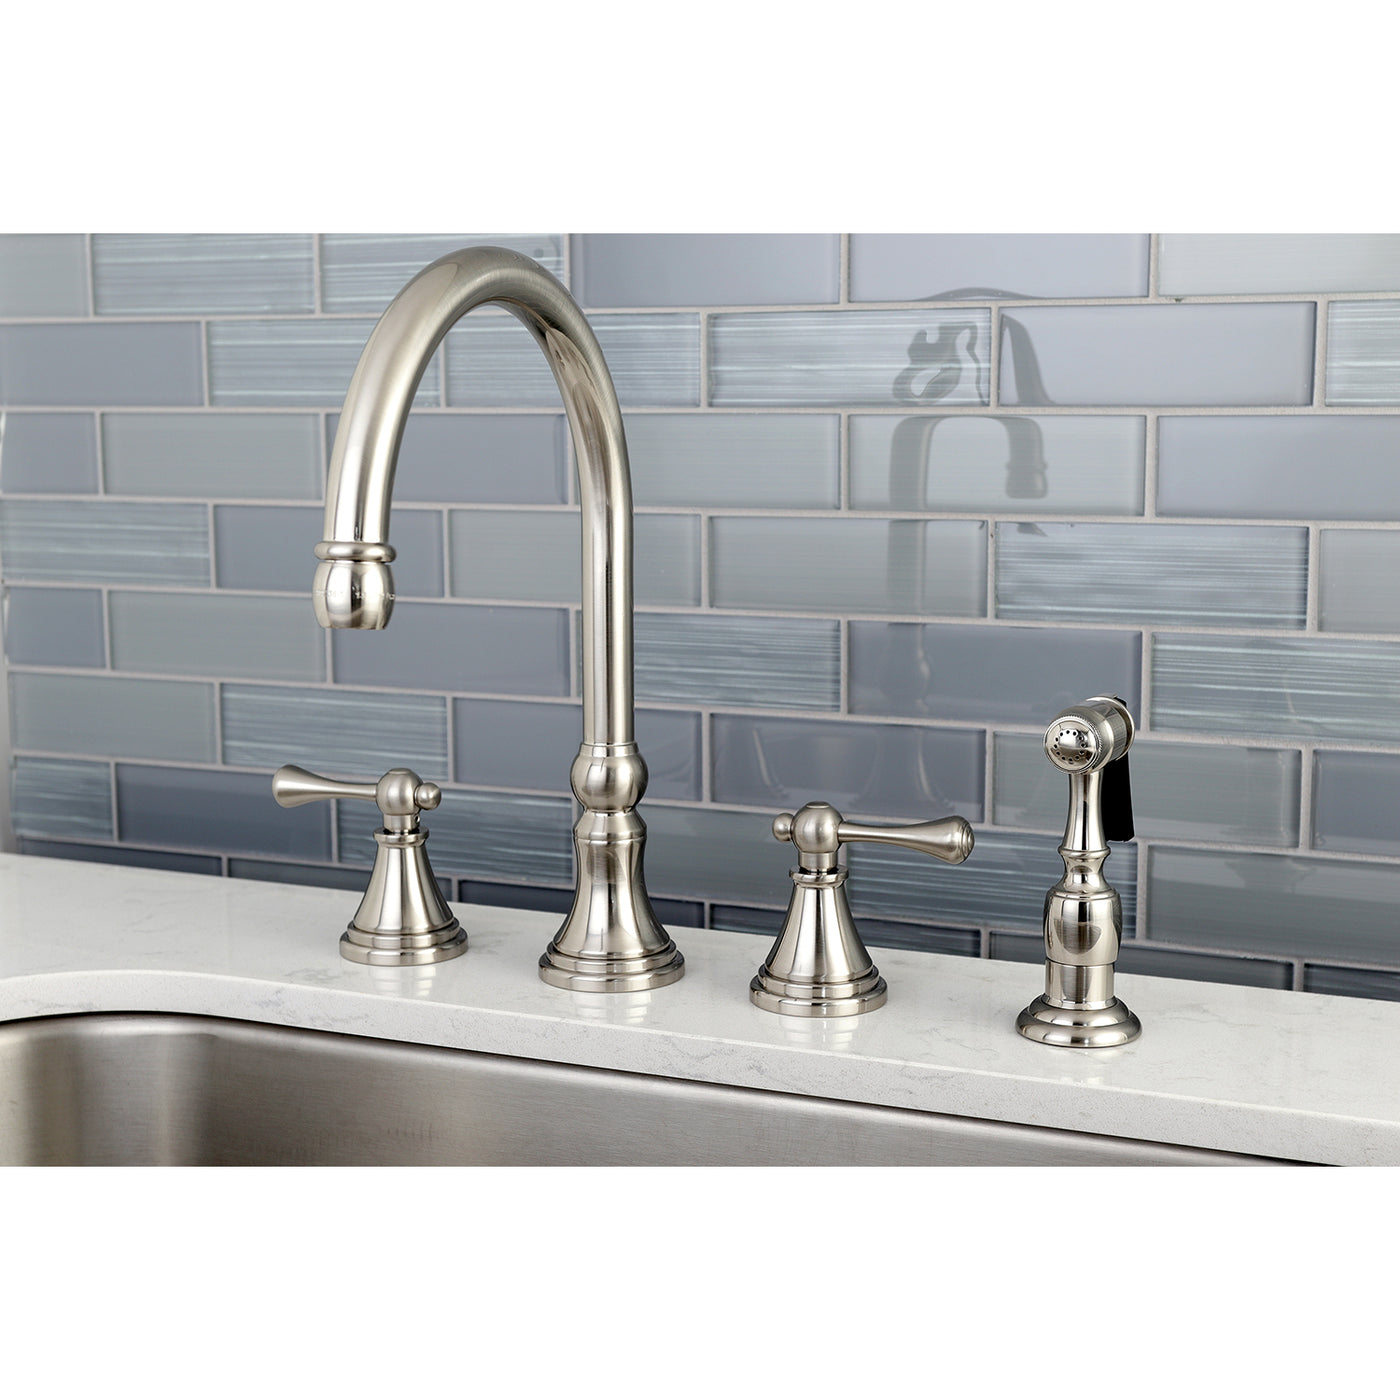 Elements of Design ES2798BLBS Widespread Kitchen Faucet with Brass Sprayer, Brushed Nickel